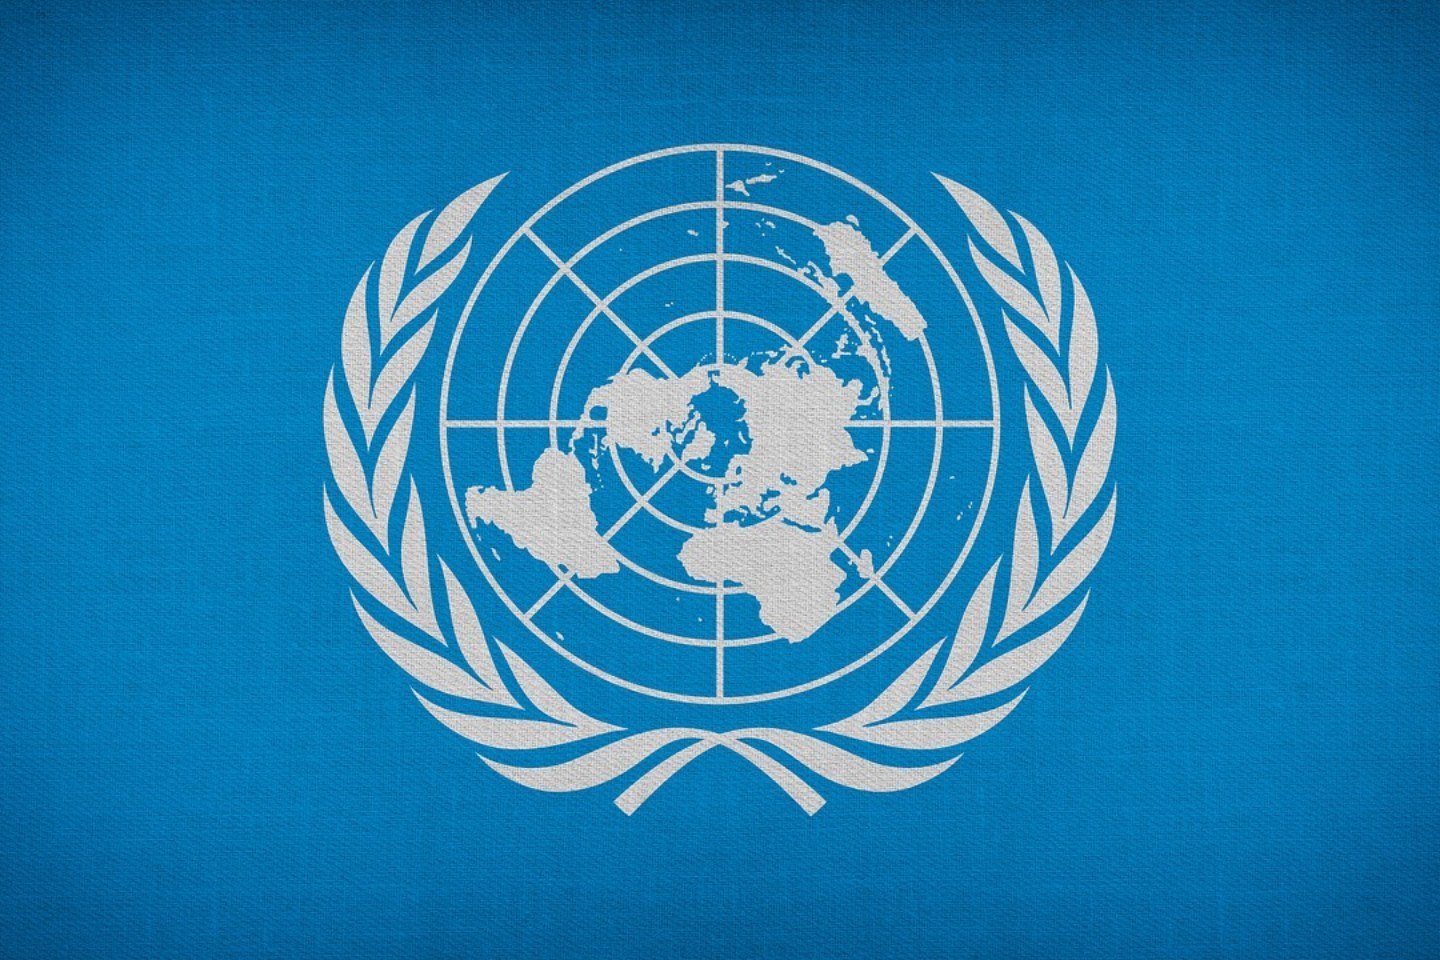 United world nation. Альтернативный флаг организации Объединенных наций. Флаг организации Объединенных наций. ООН против терроризма. Эмблема ООН.